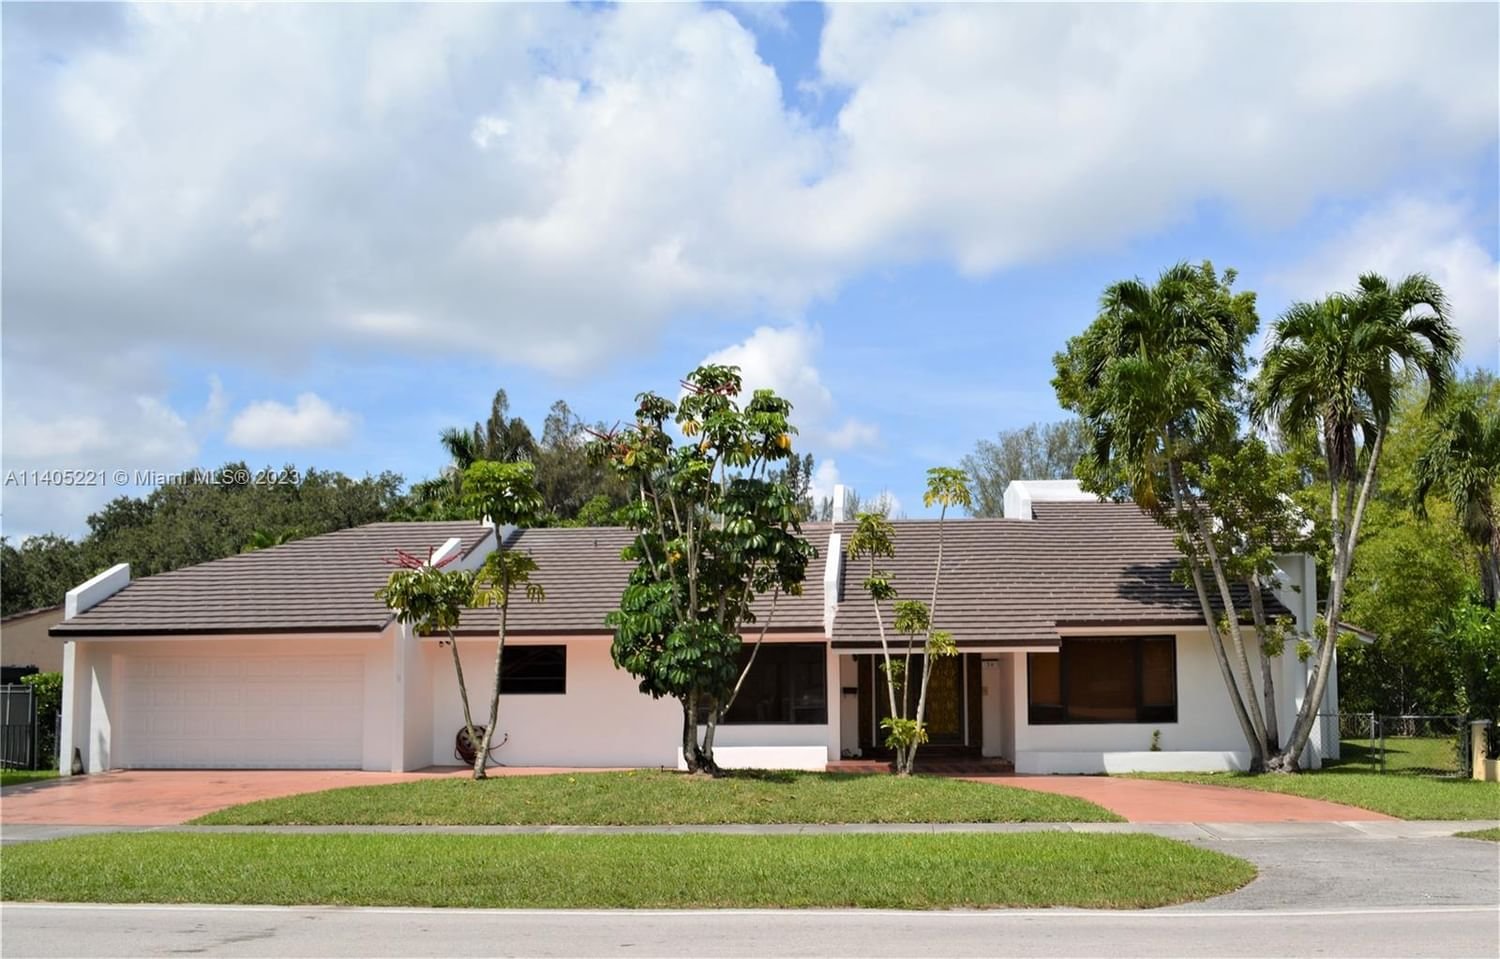 Real estate property located at 34 Royal Poinciana Blvd, Miami-Dade County, REV PL SEC 2 COUNTRY CLUB, Miami Springs, FL